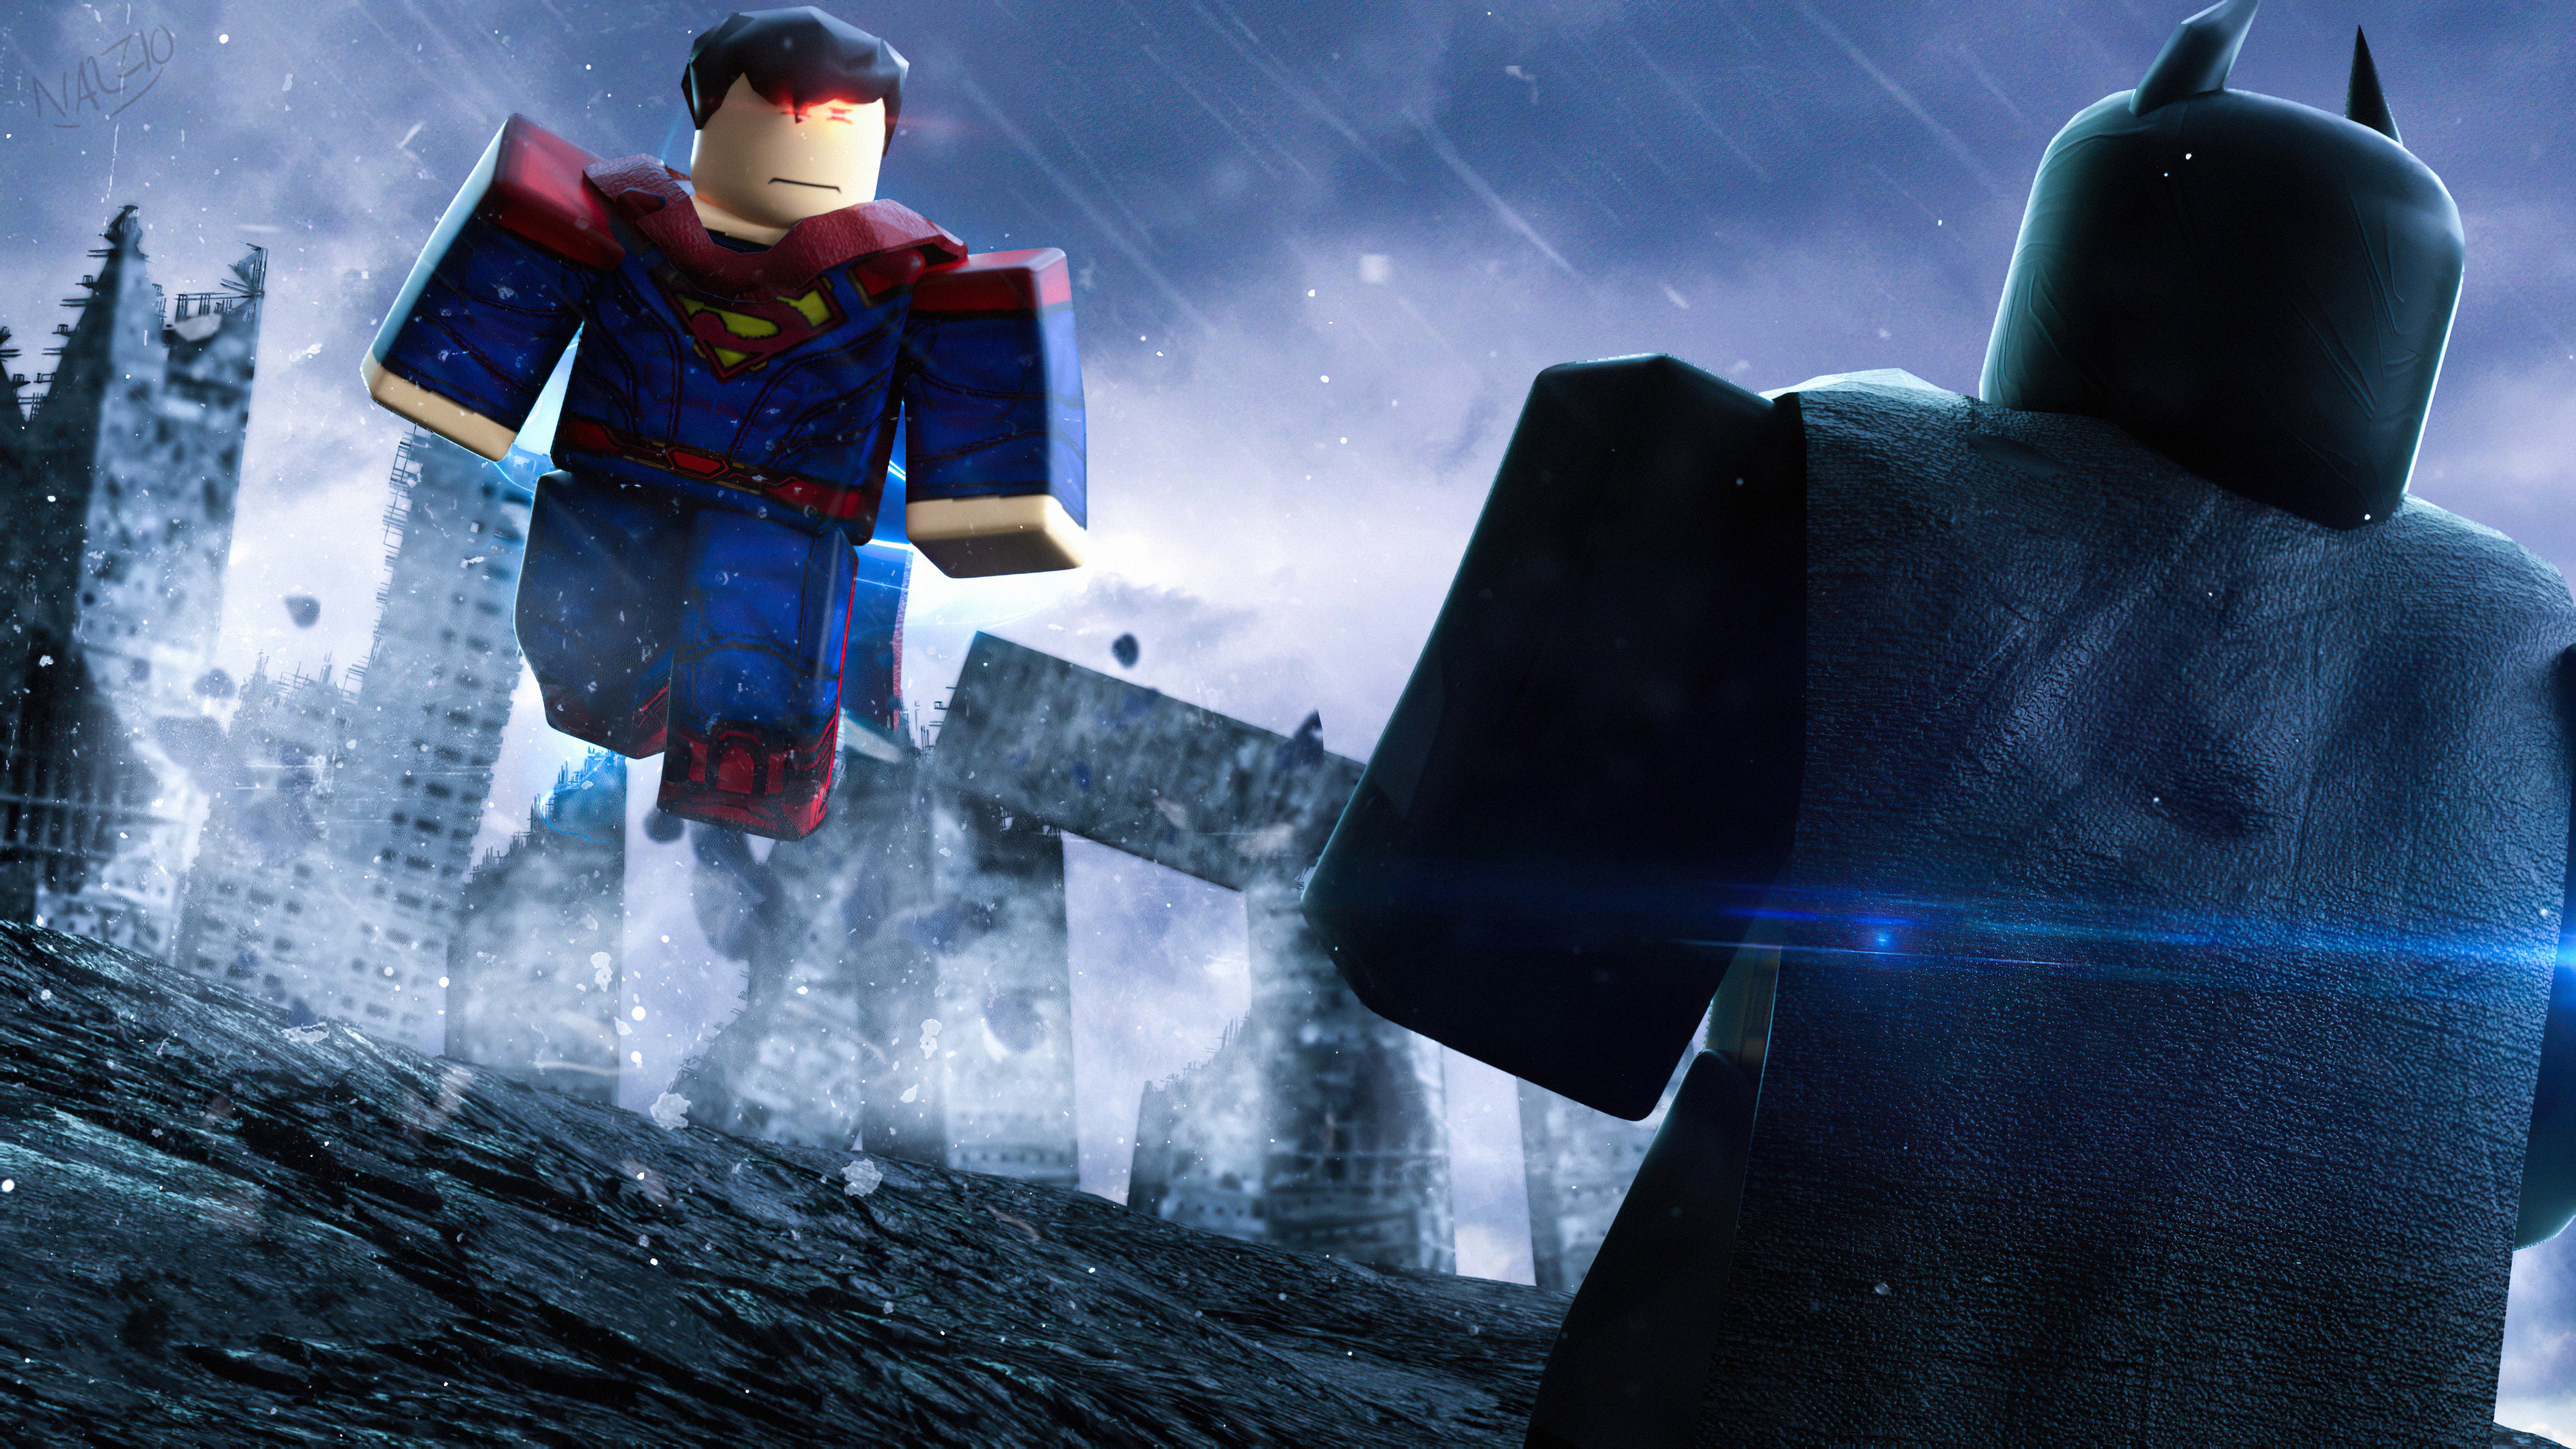 Fondos de pantalla Batman contra Superman estilo Lego